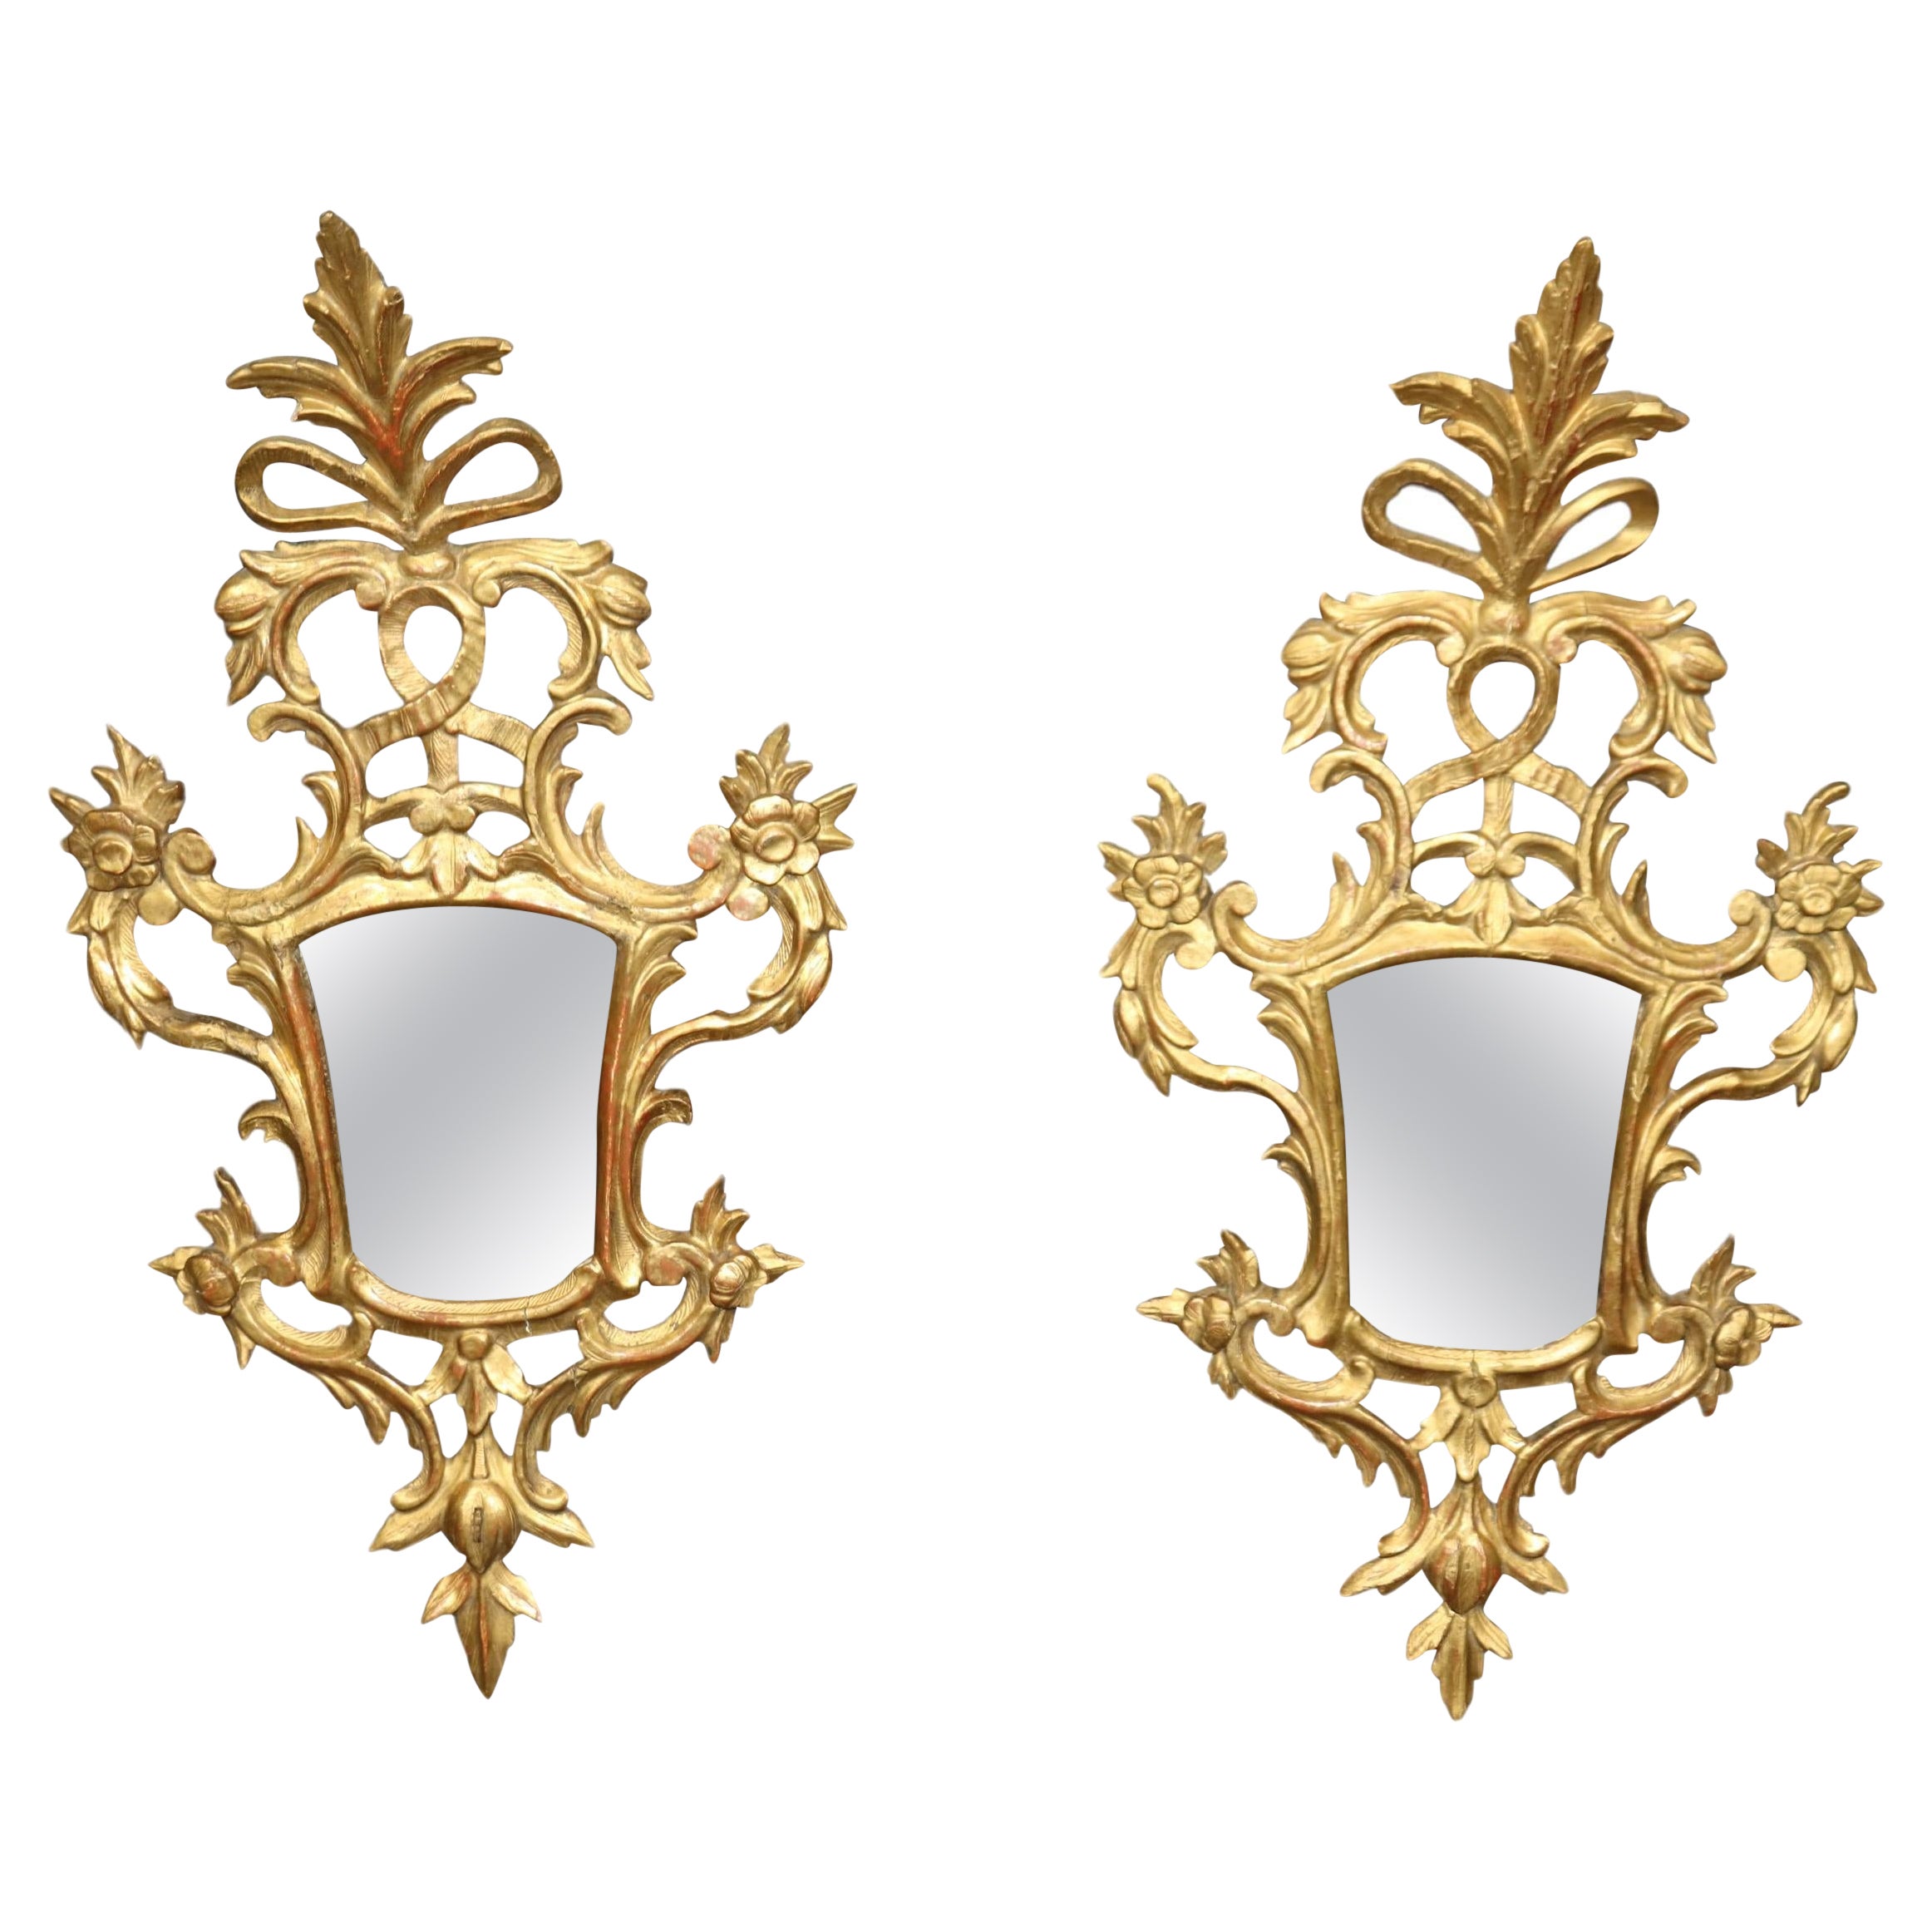 Fantastic Diminutive Water Gilded Carved Italian Rococo Mirrors Circa 1820s For Sale